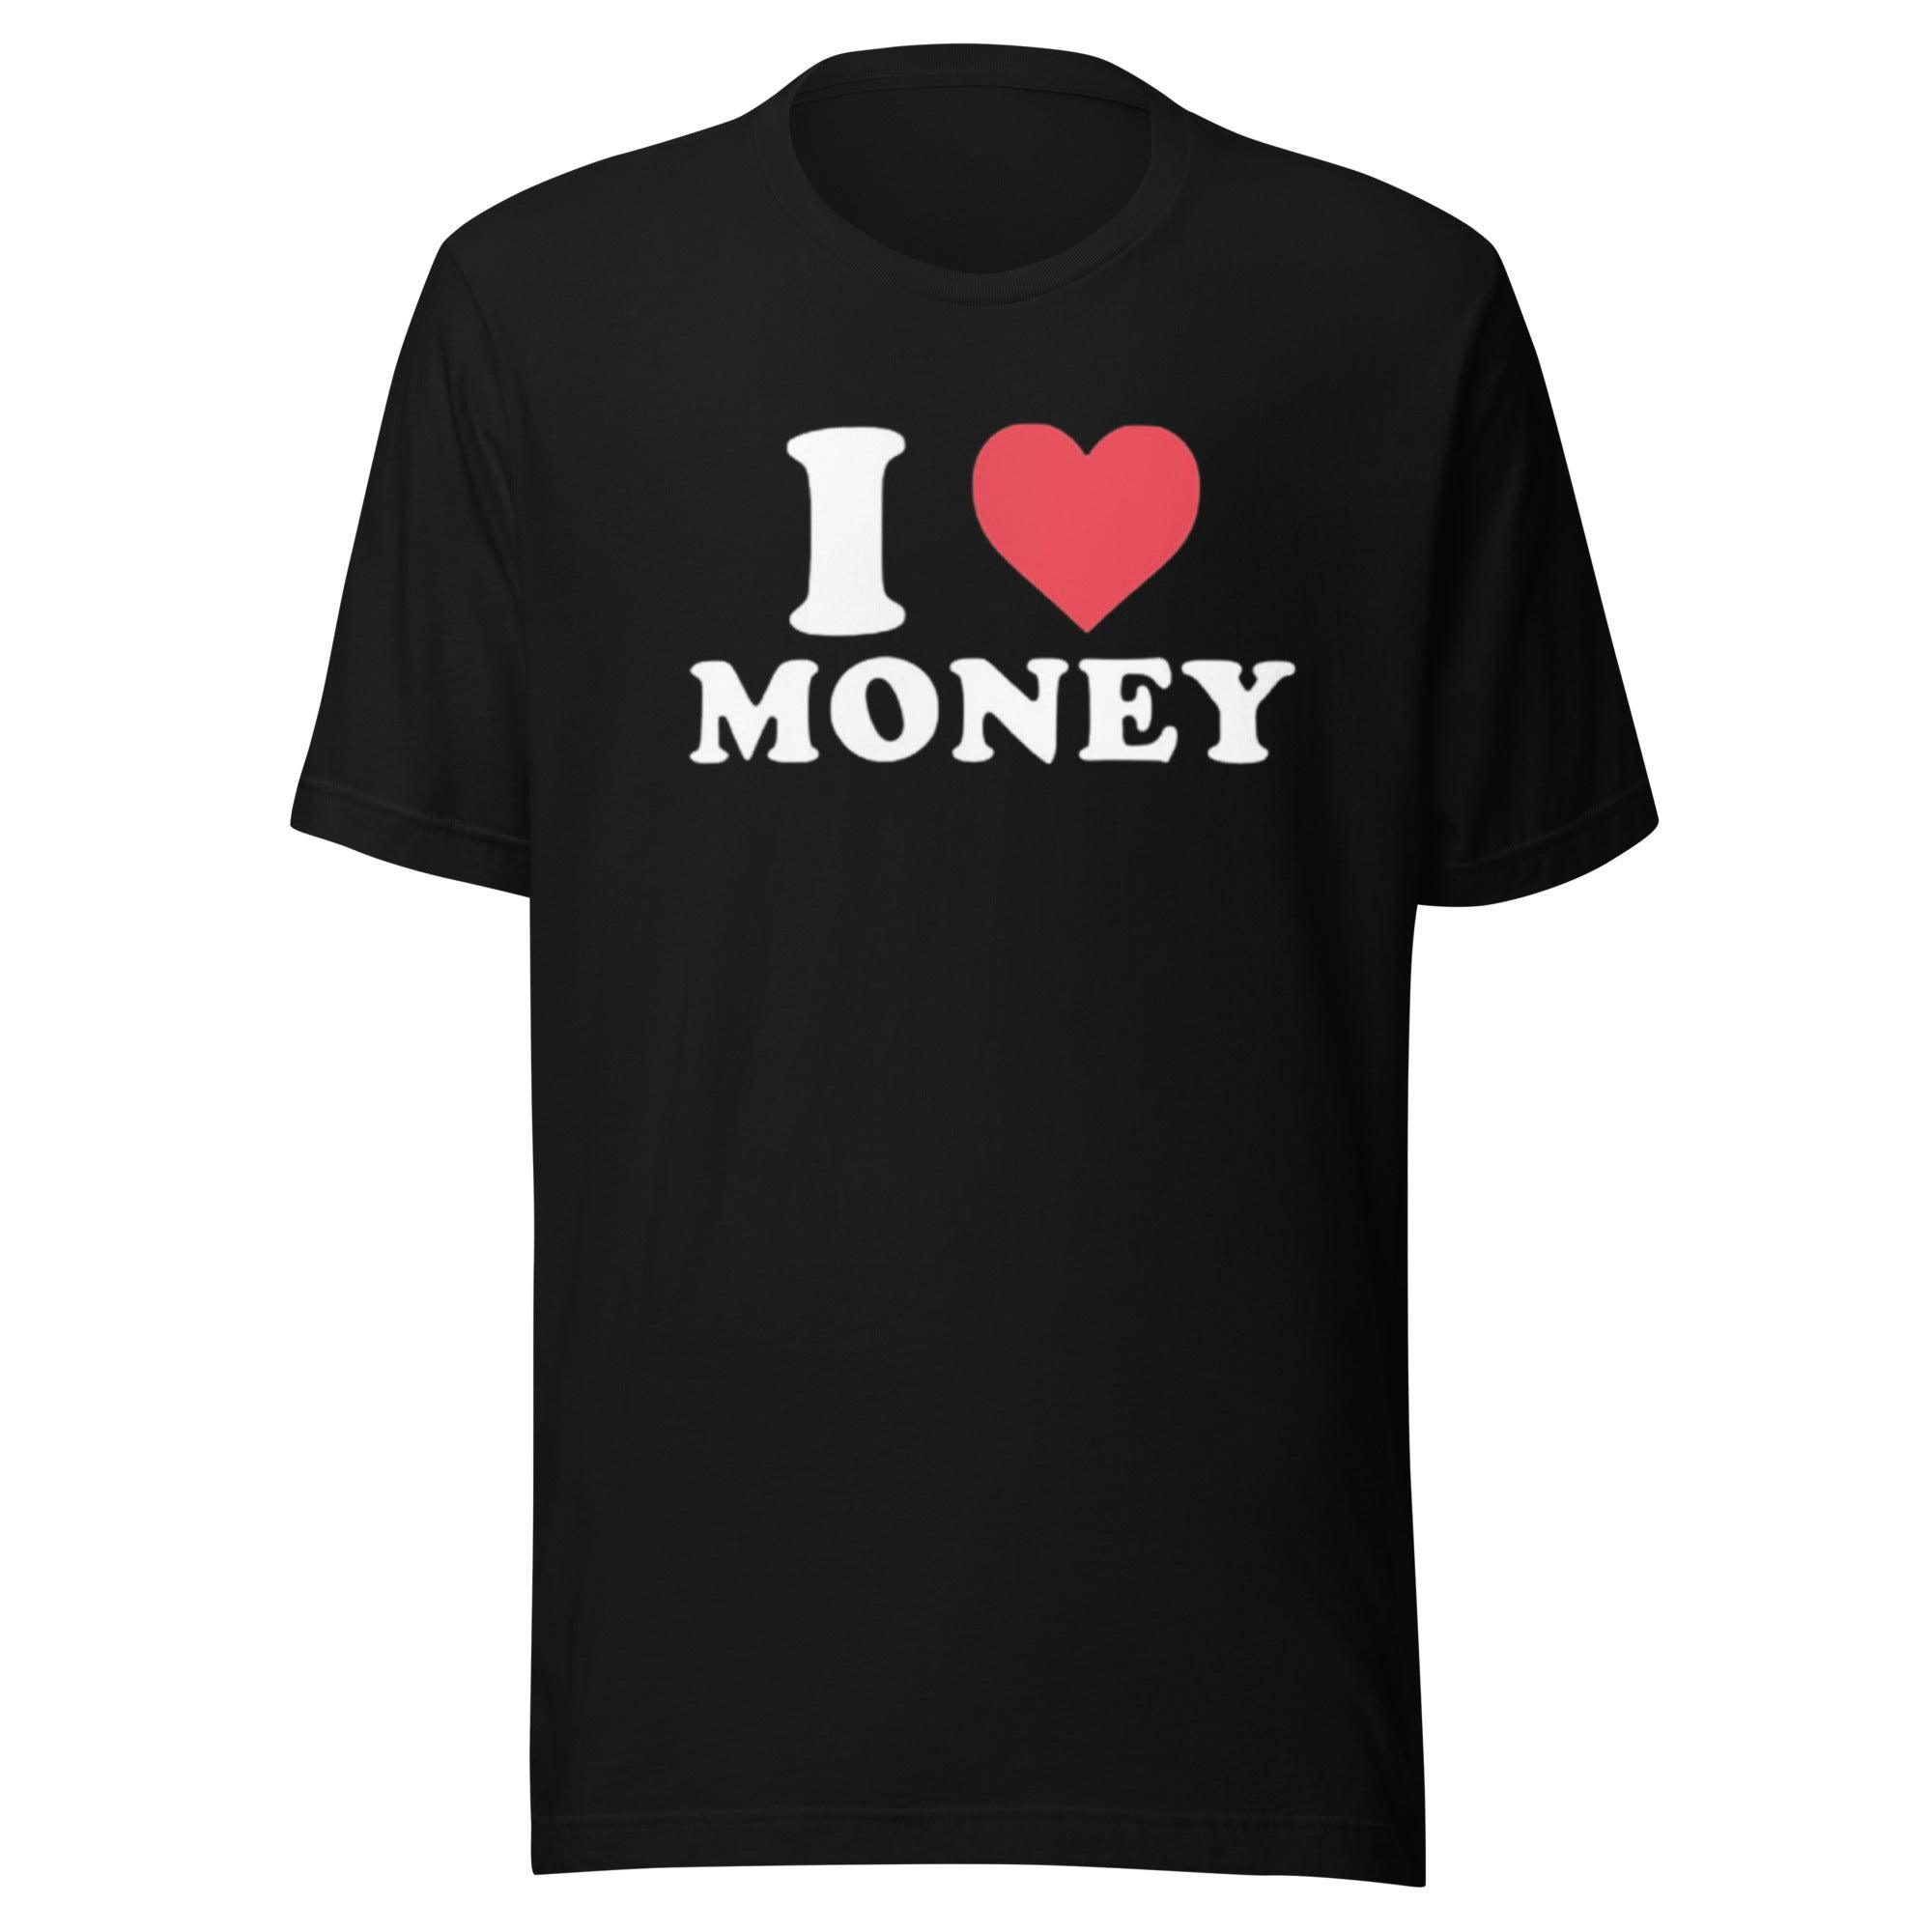 I Love Money 100% Ultra Soft Cotton Unisex Short Sleeve Crew Neck Top - TopKoalaTee